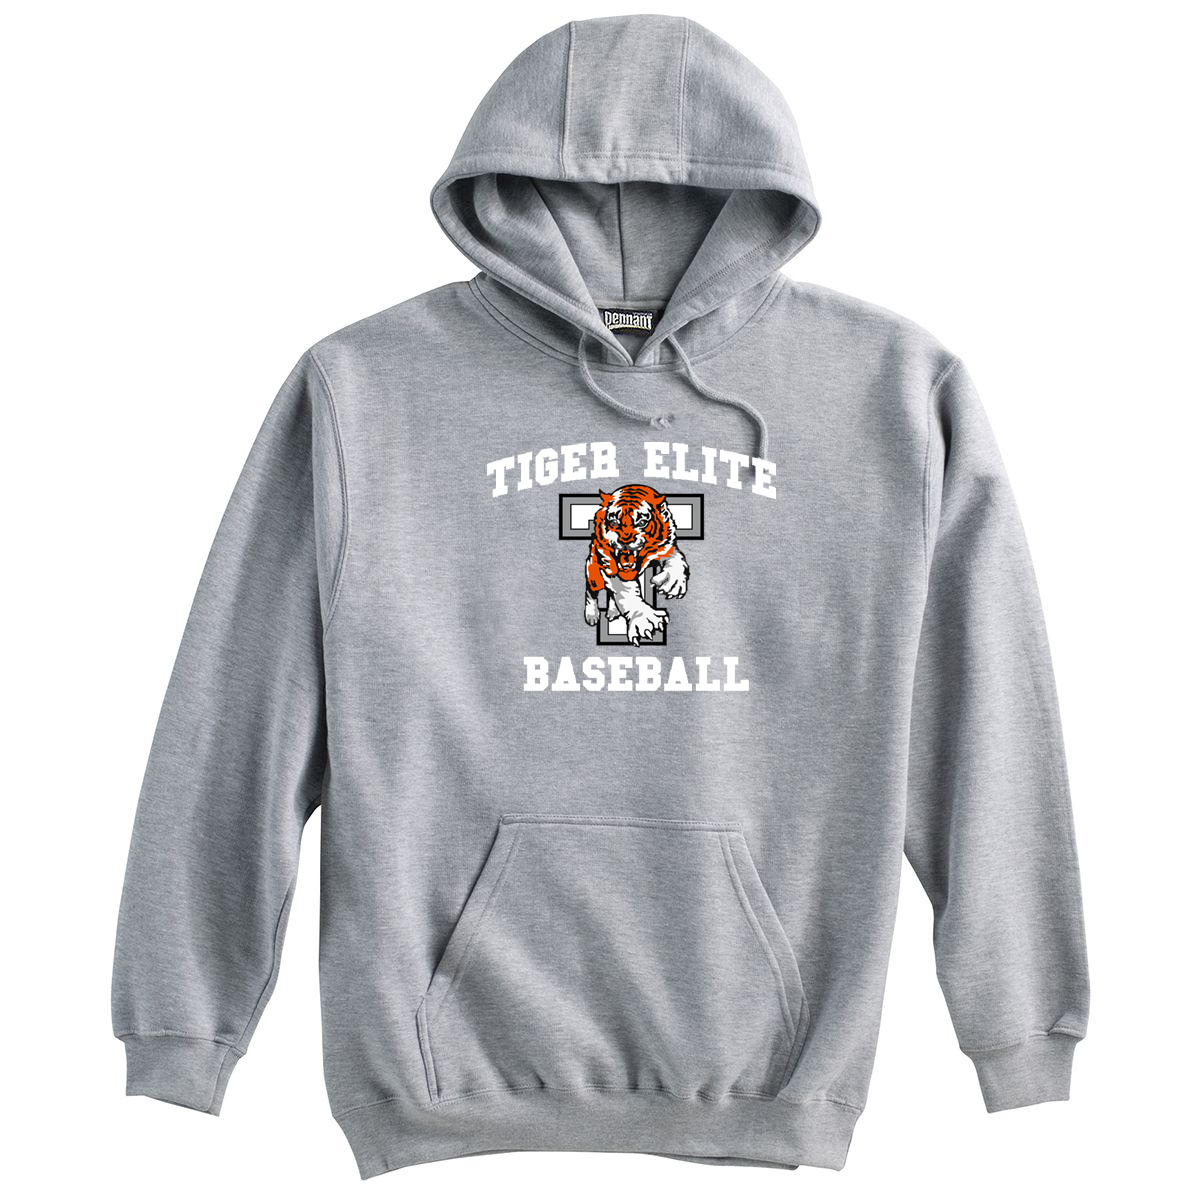 Tiger Elite Baseball Sweatshirt